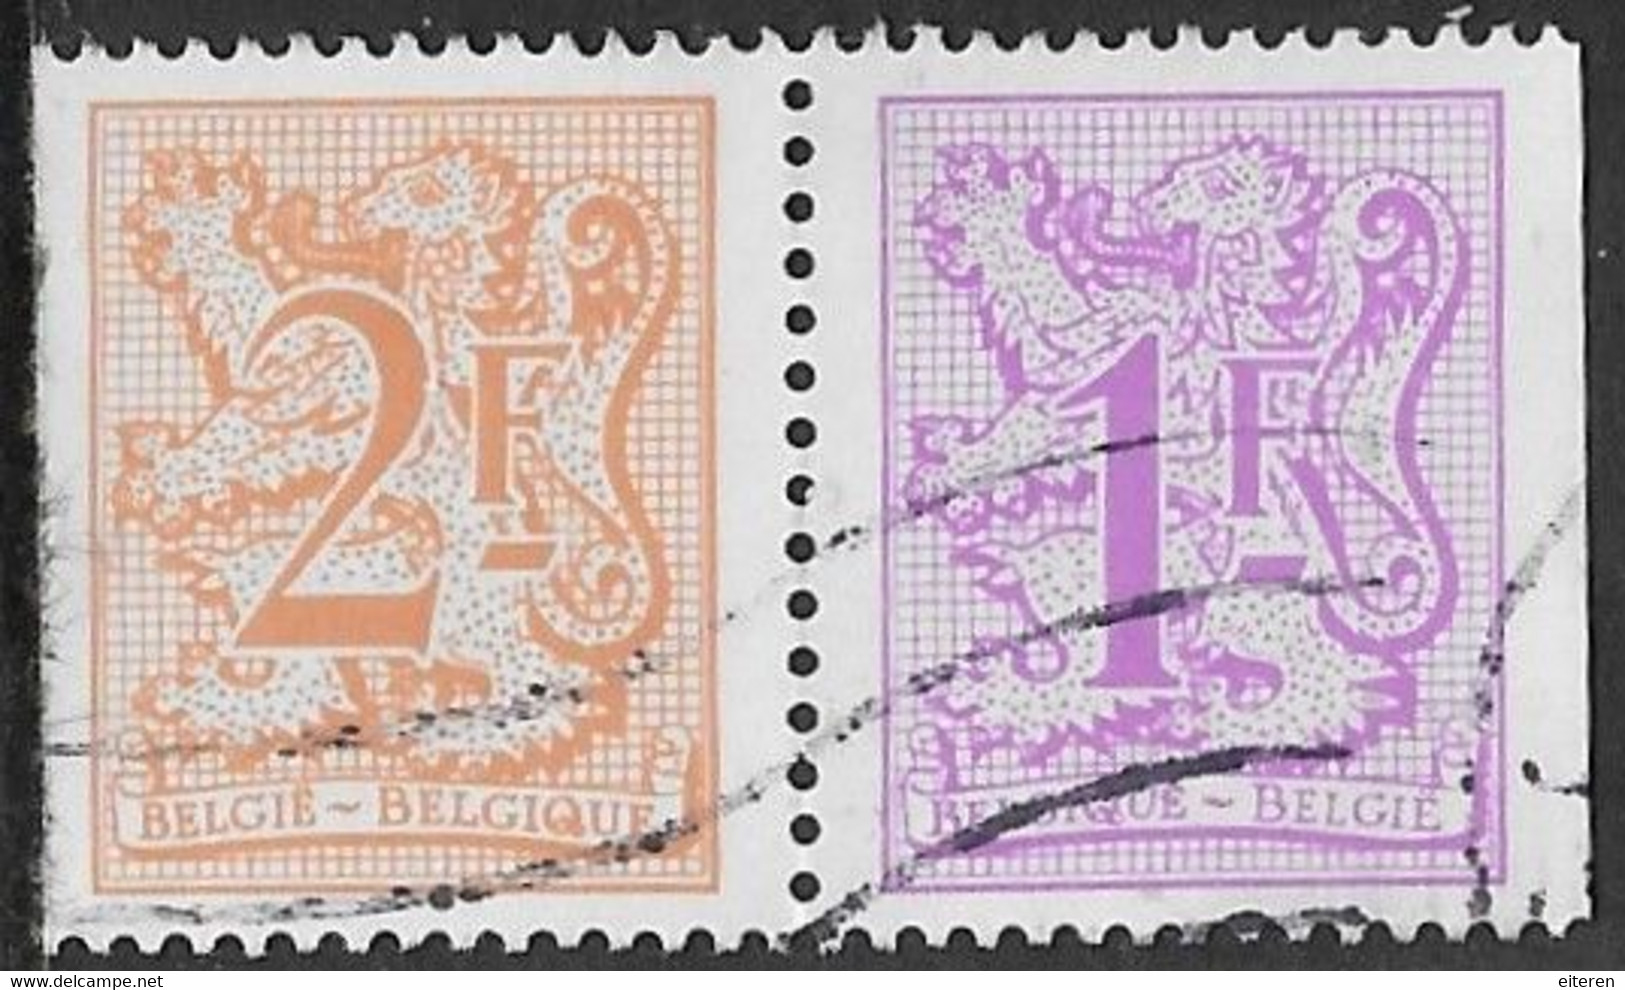 Combinatie Postzegelboekje - 1977-1985 Zahl Auf Löwe (Chiffre Sur Lion)